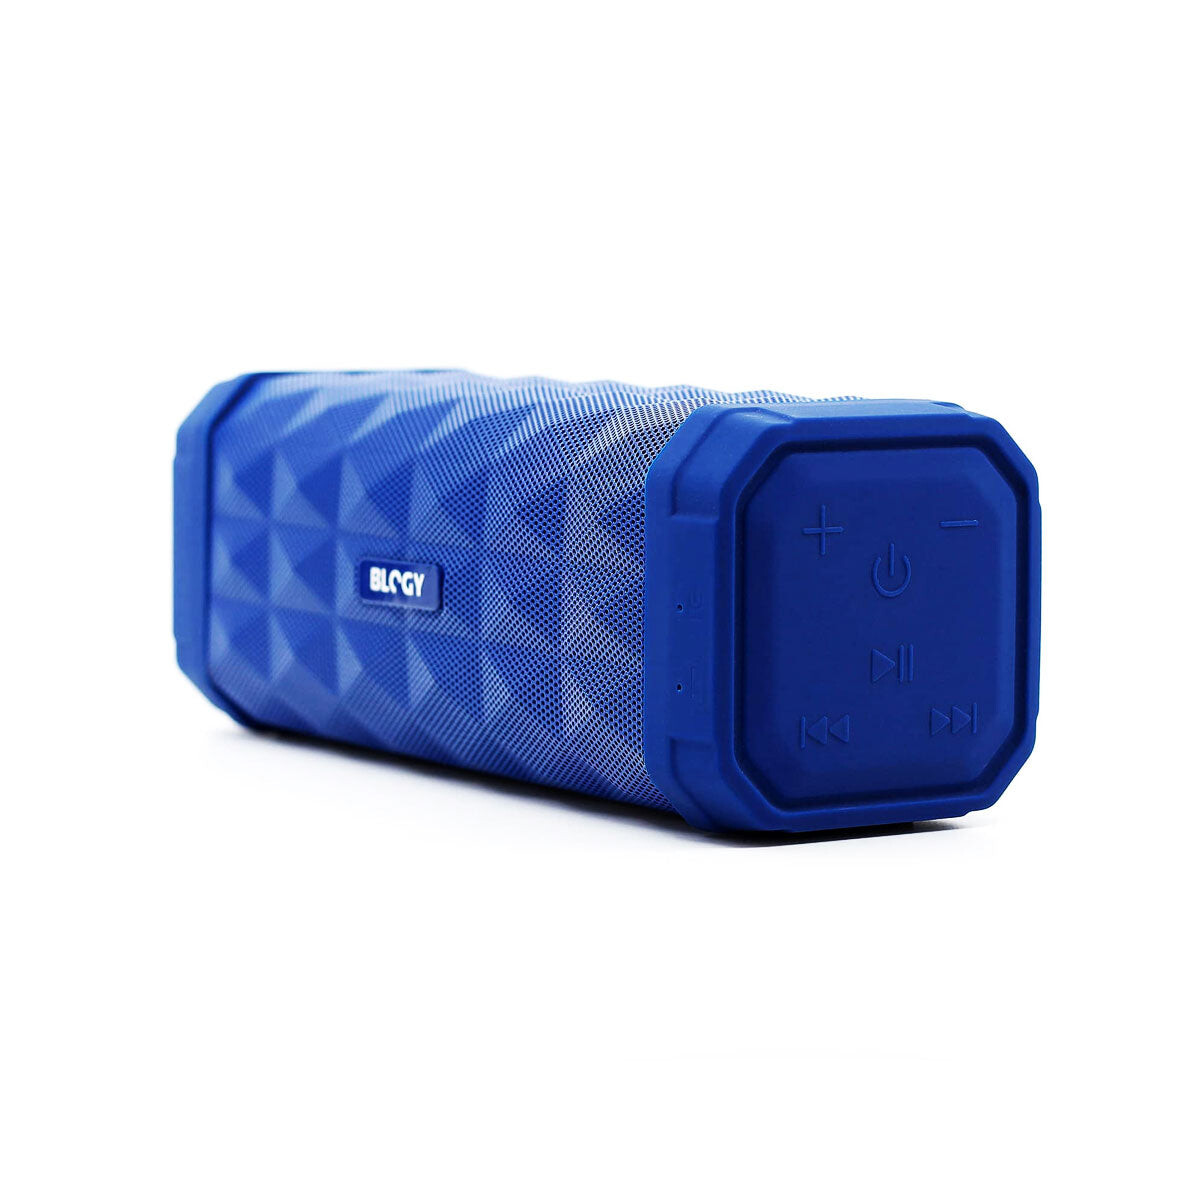 Parlante Portátil Blogy Bluetooth Super Potente IPX5 - Azul 